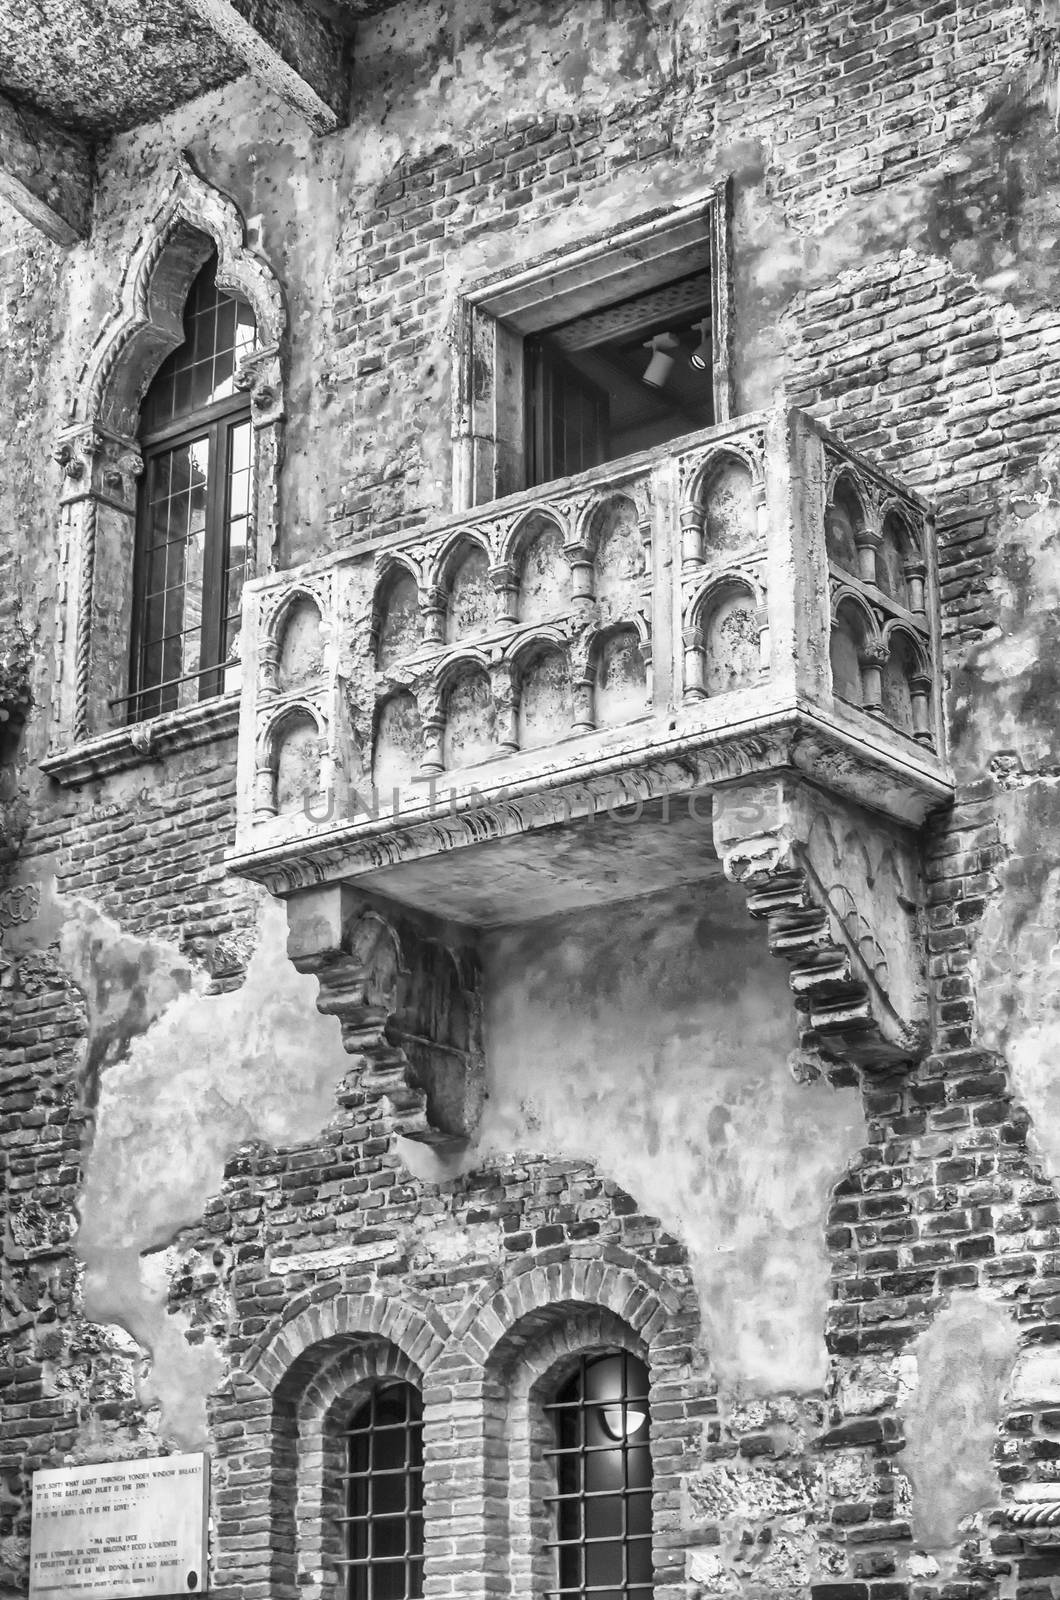 The famous balcony of Romeo and Juliet in Verona, Italy by marcorubino